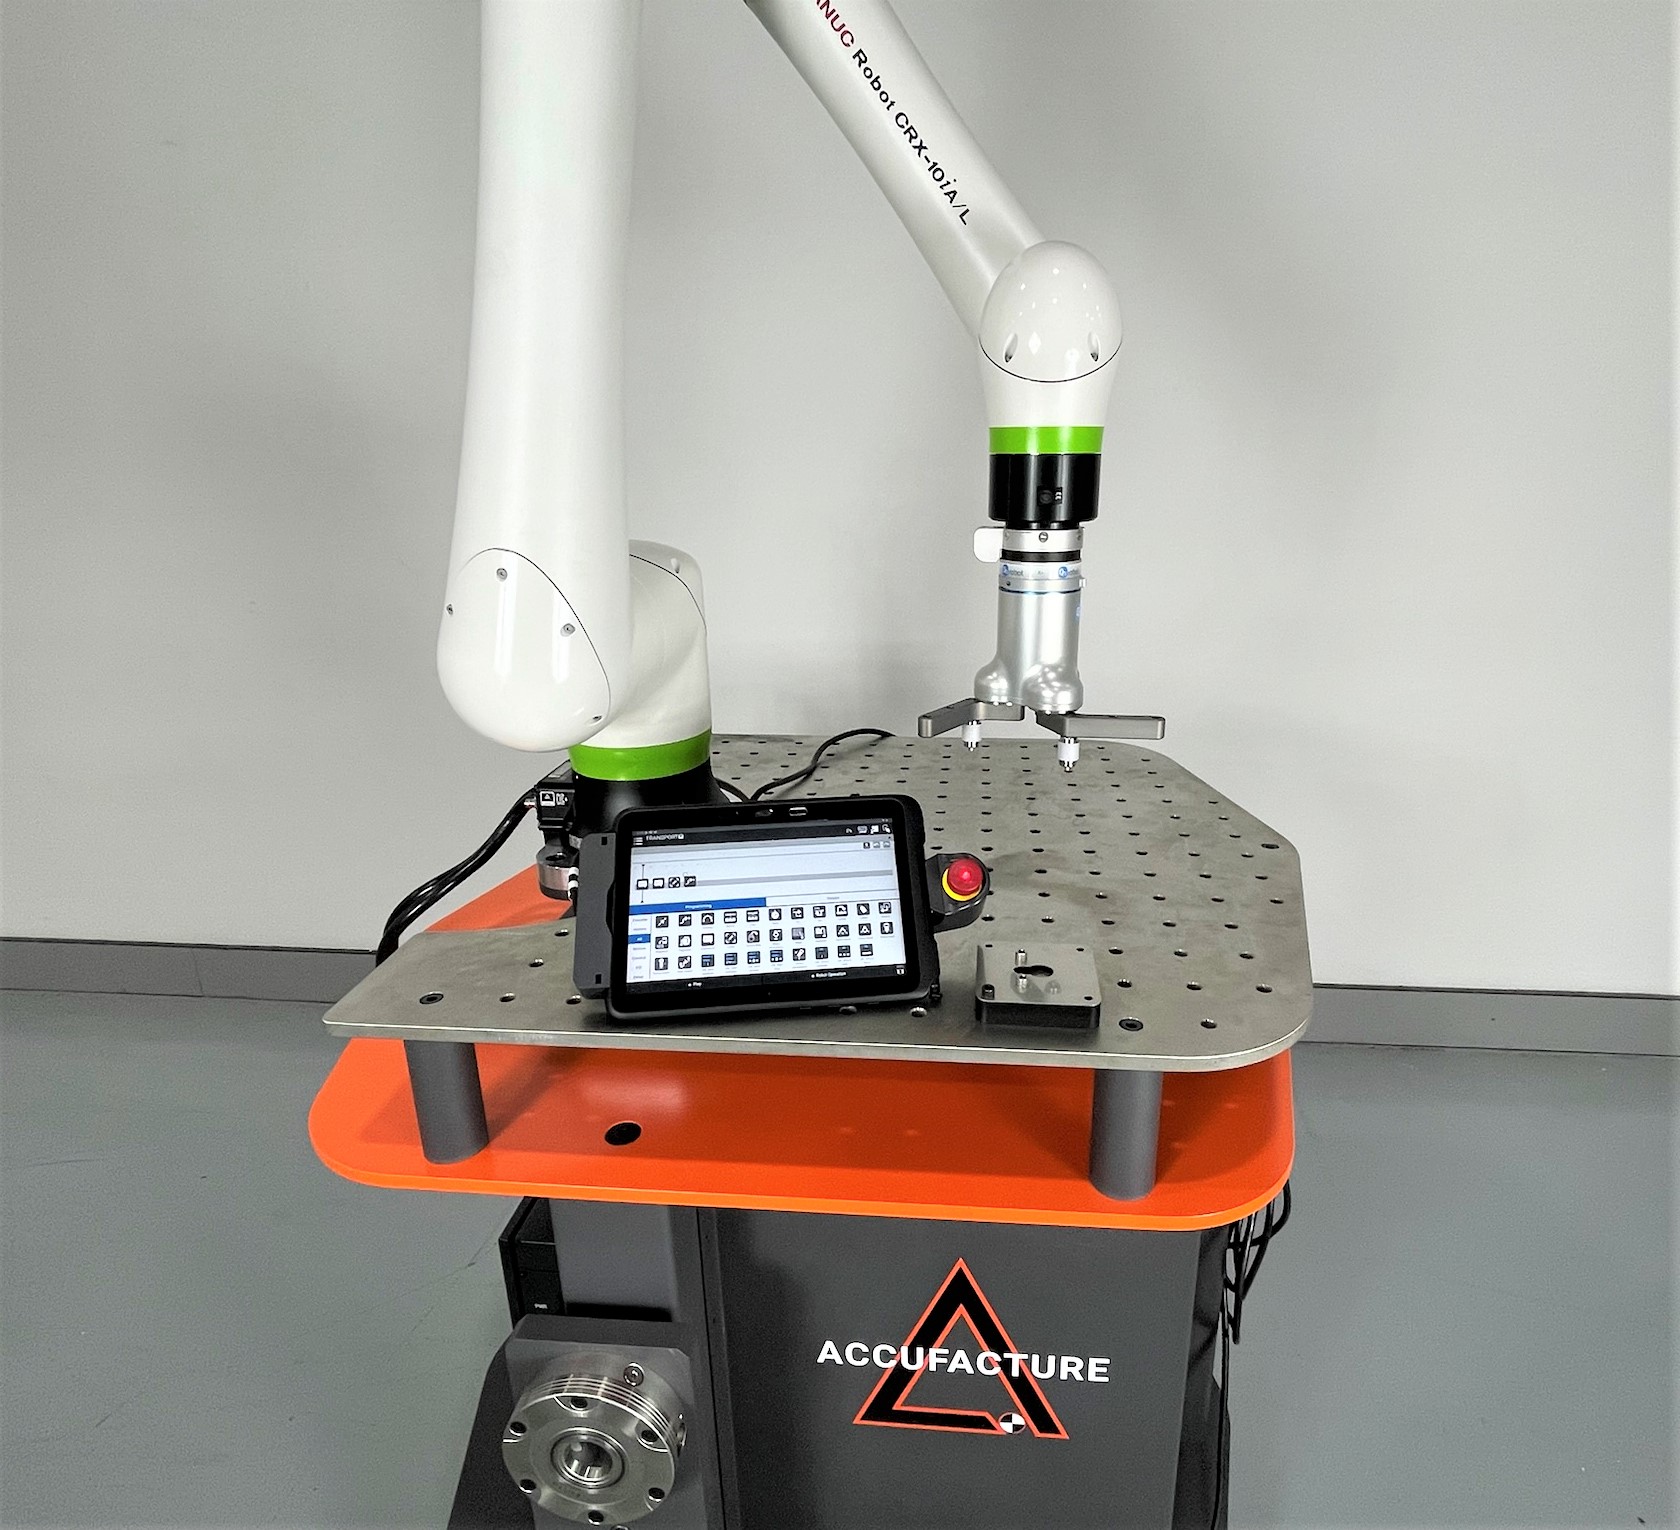 AccuTask robotic mobile workstation